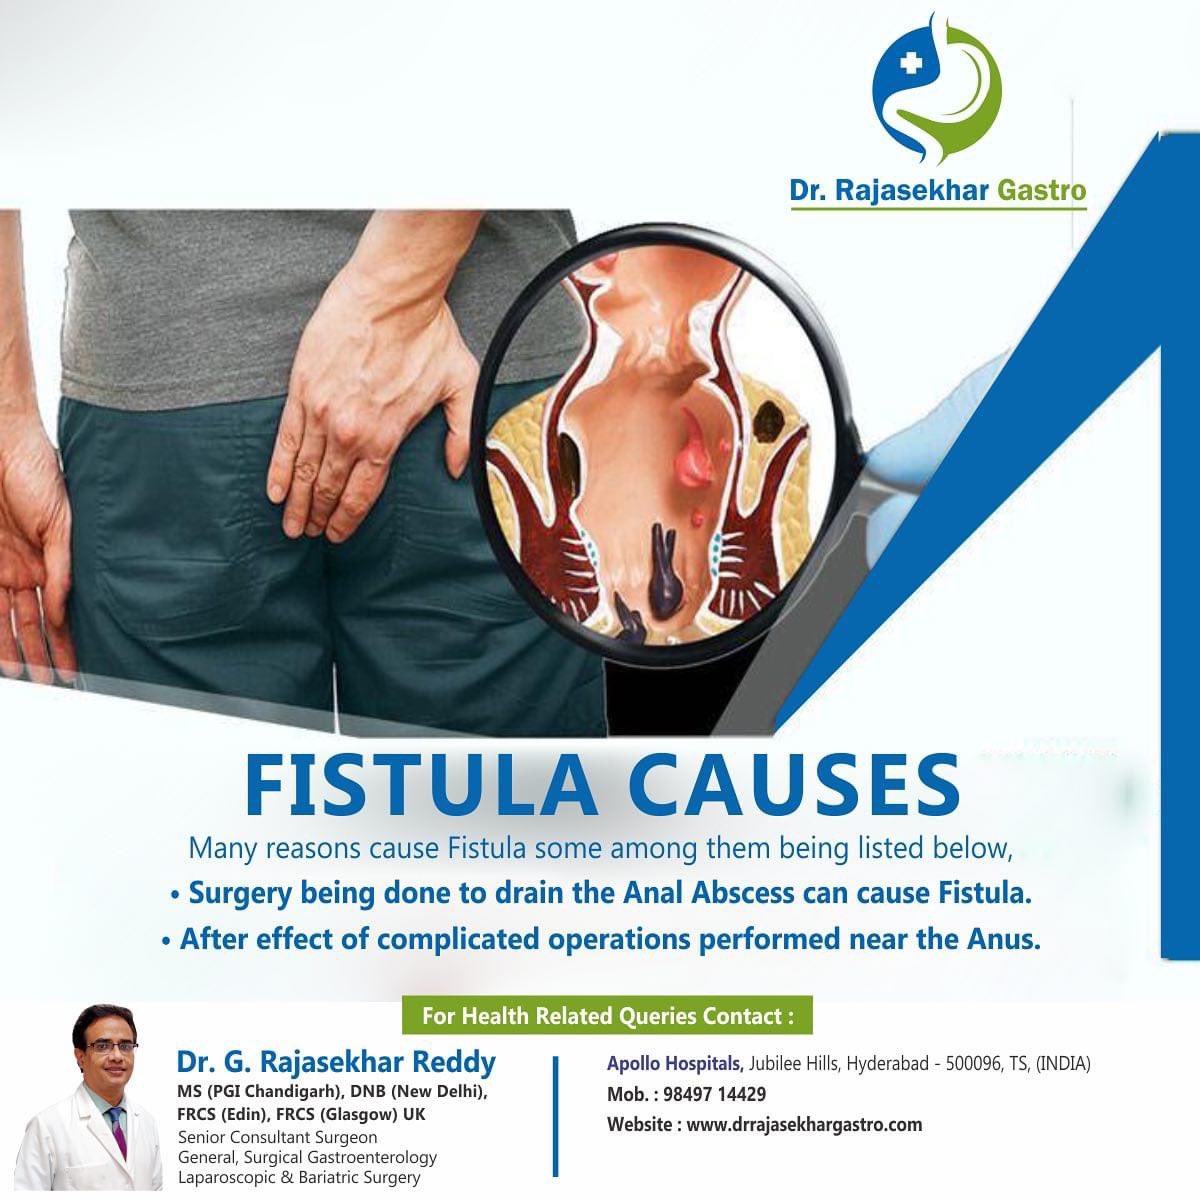 Fistula causes

Consult us now!! 

Best Fistula treatment in Hyderabad 

#DrGRajashekar #piles #pilestreatment #causes #fistulatreatment #fissuretreatment #lasertreatment #painless #procedure #nocuts #nowounds #contactus #callnow #hyderabad #gastropost #gastrosurg #gallbladder